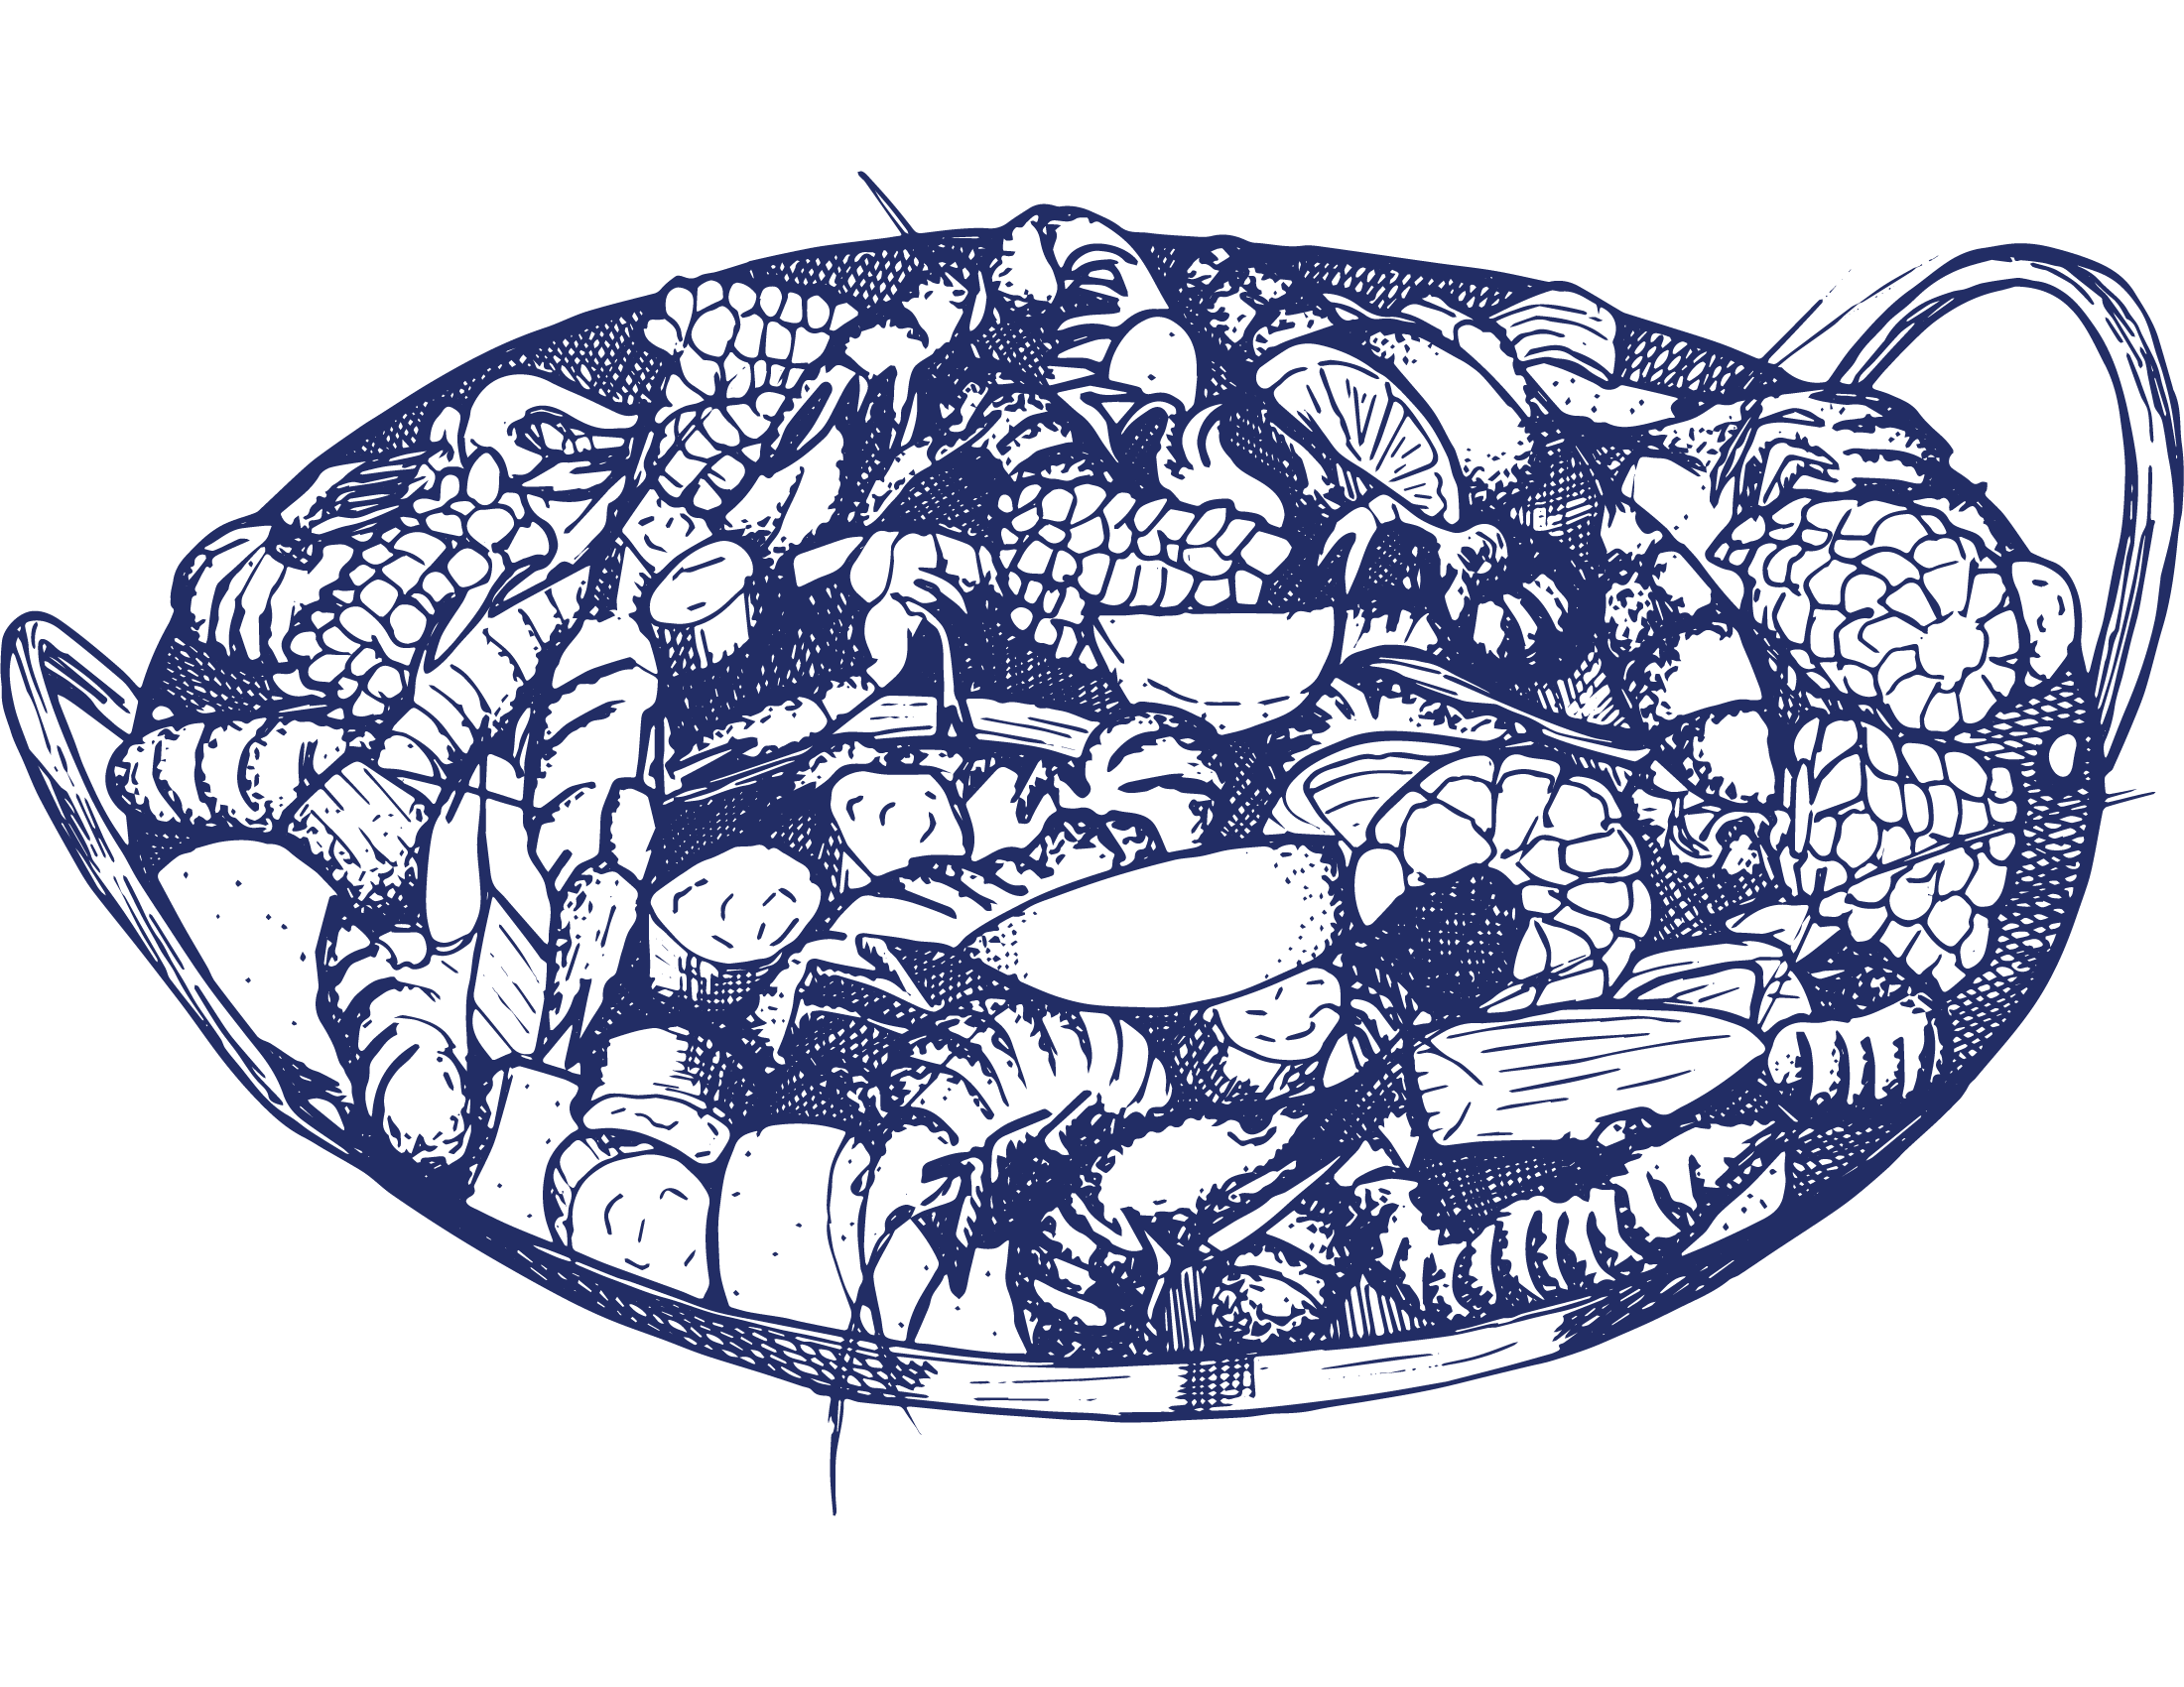 Crawfish boil line art Illustration - Restaurant mixes